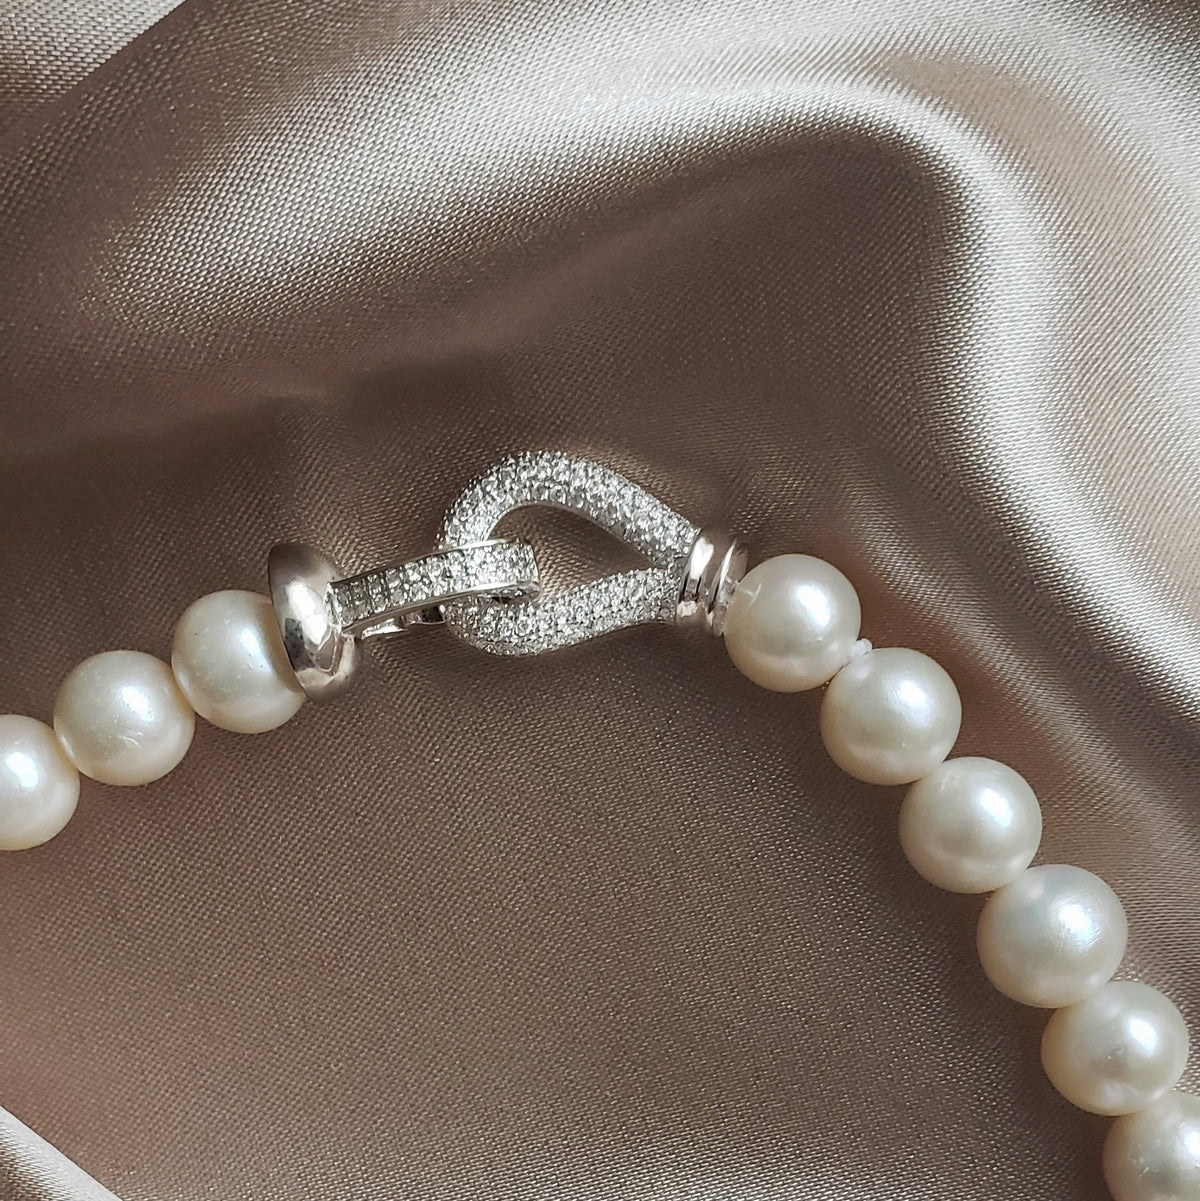 Tringa Pearl necklace